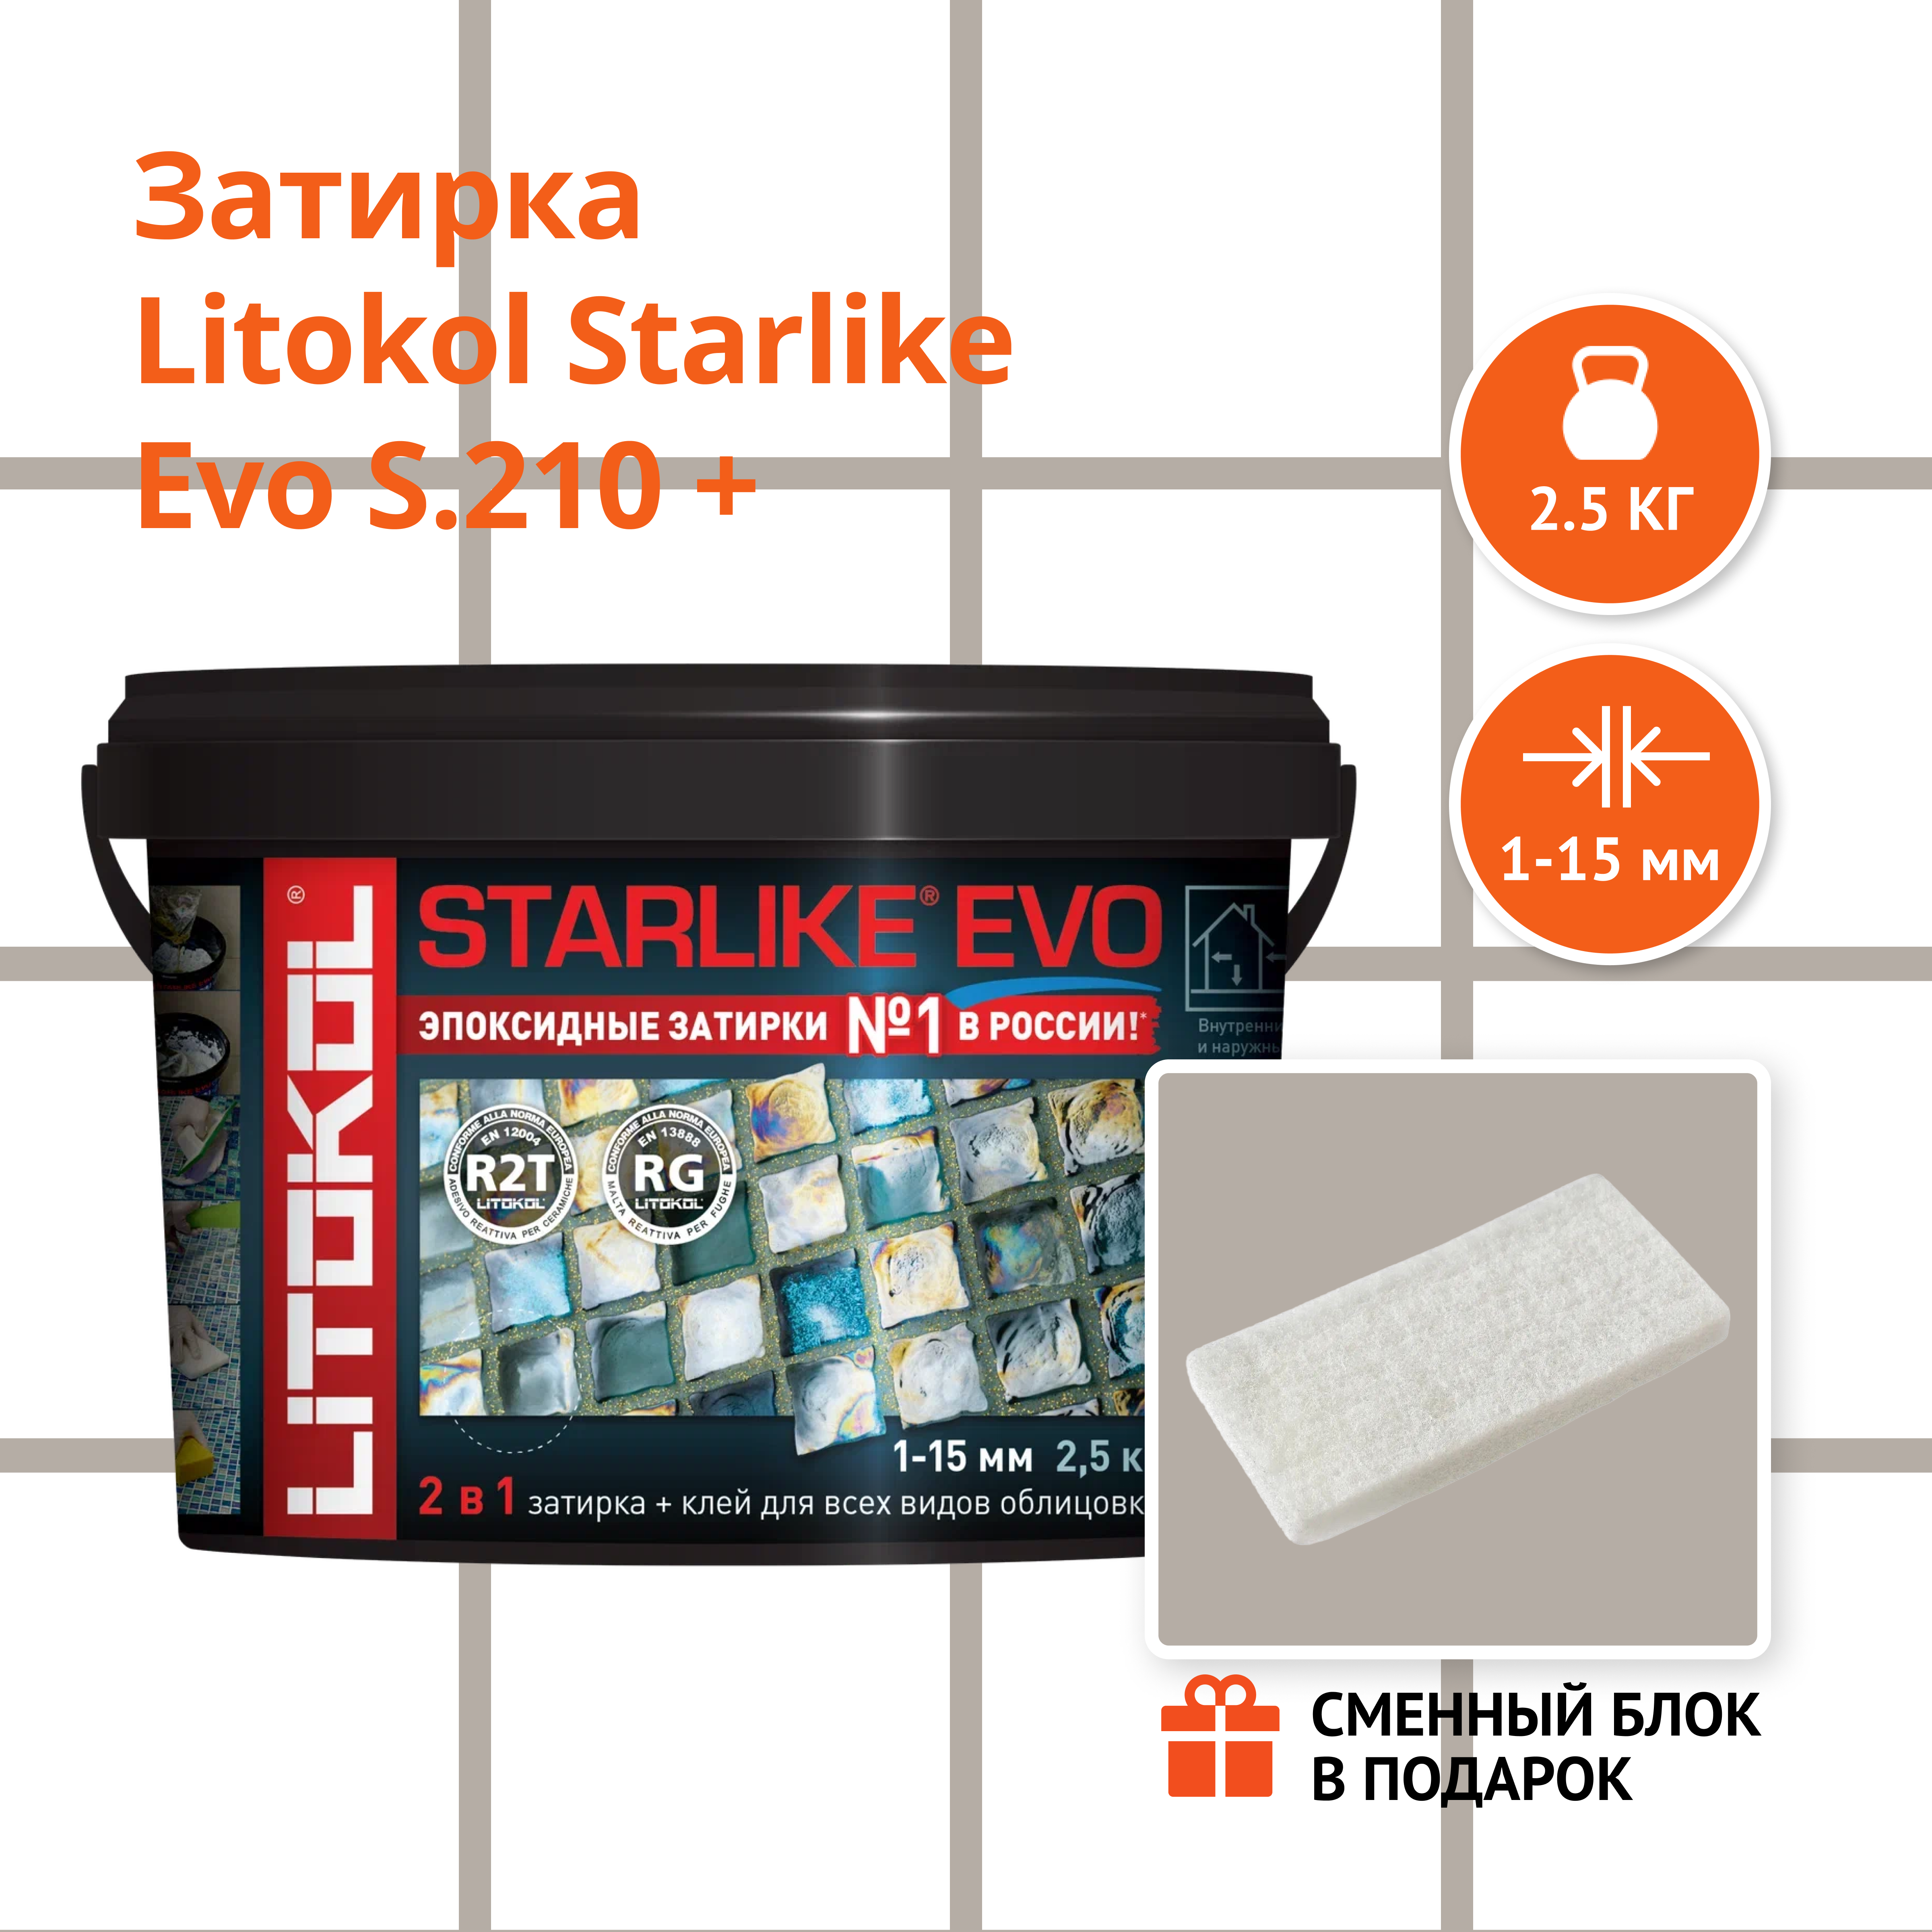 Затирка LITOKOL STARLIKE EVO S.210 GREIGE 2.5 кг + Сменный блок в подарок